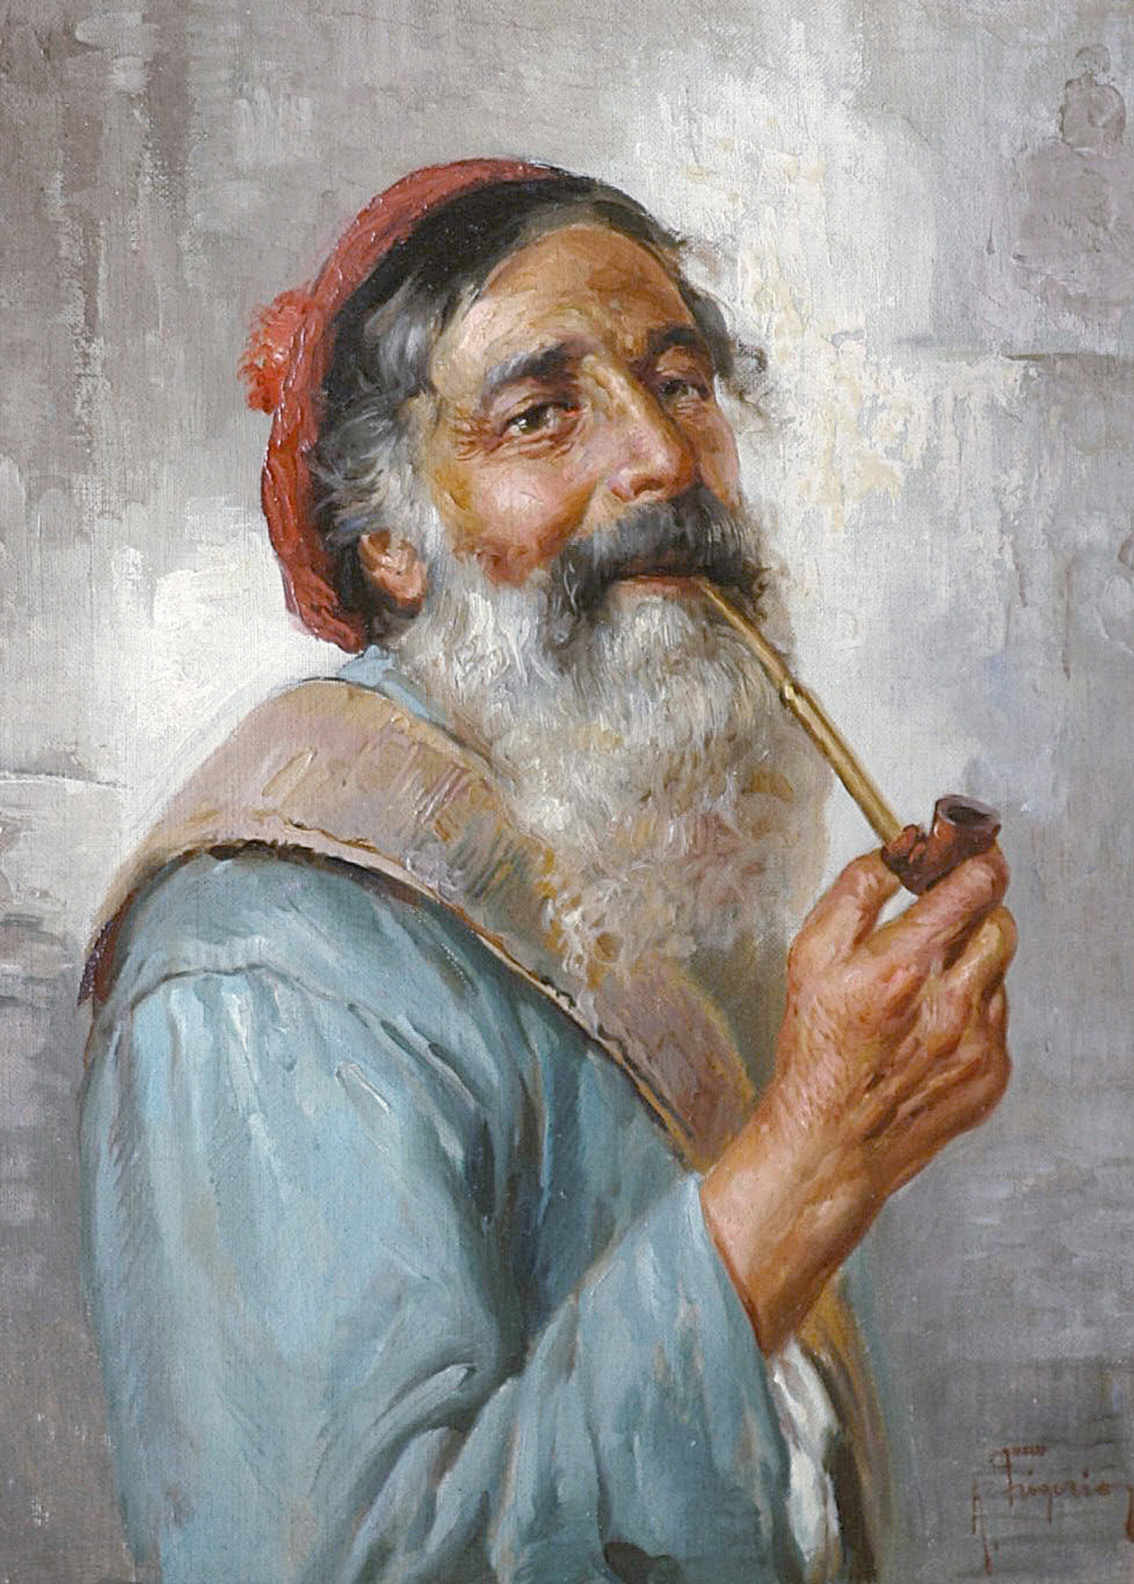 A Capri fisherman smoking